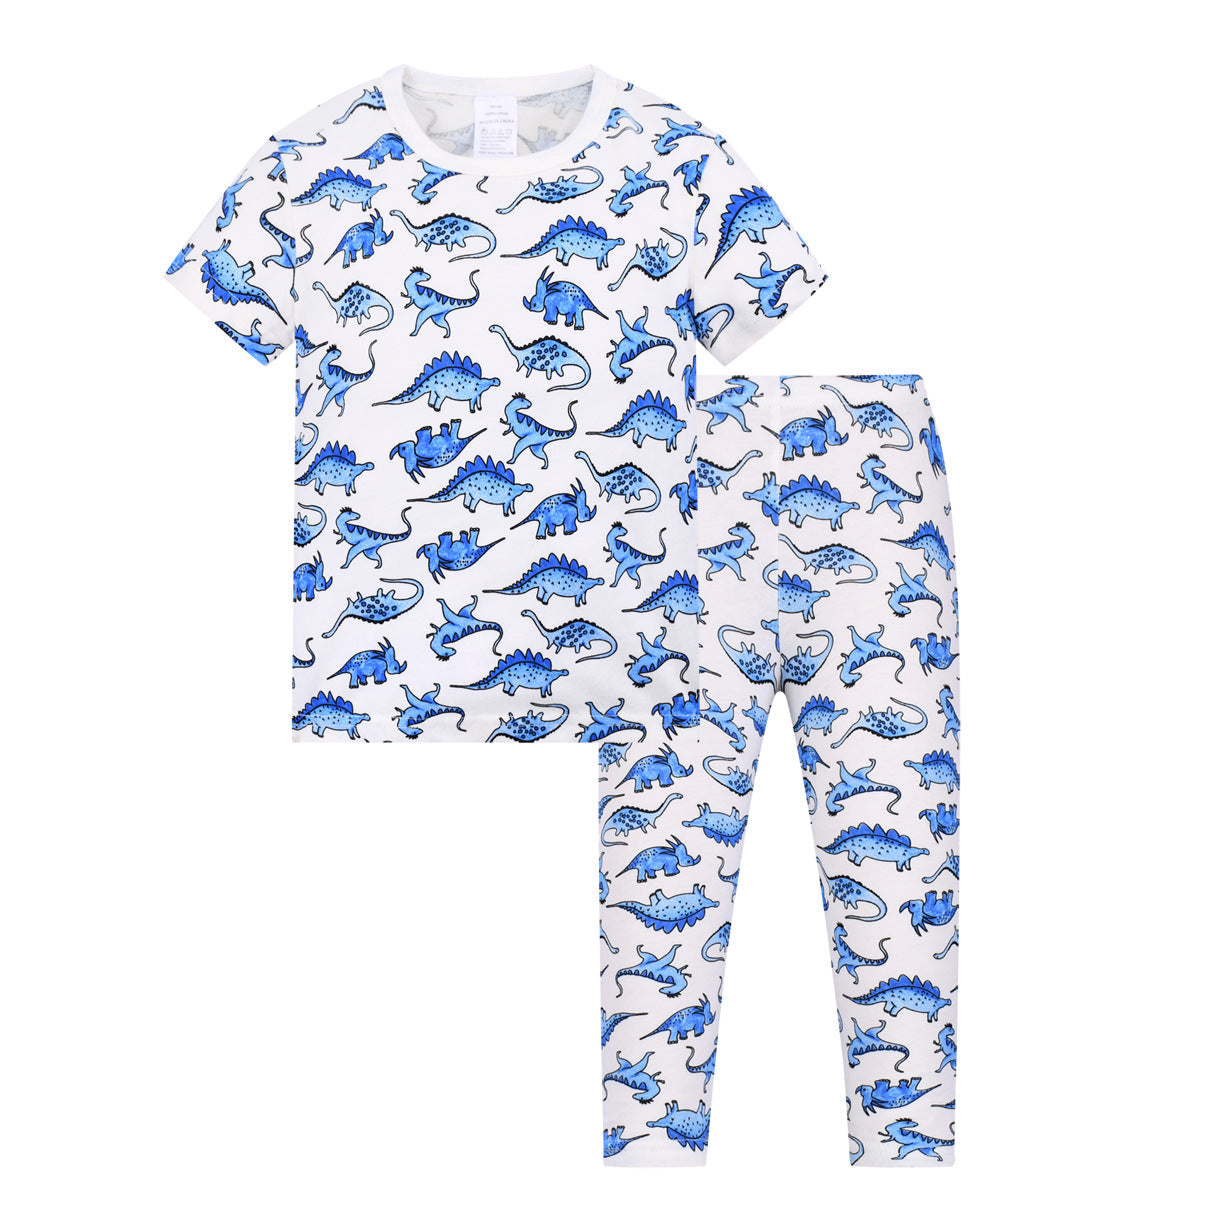 Dinosaur print pajamas for children